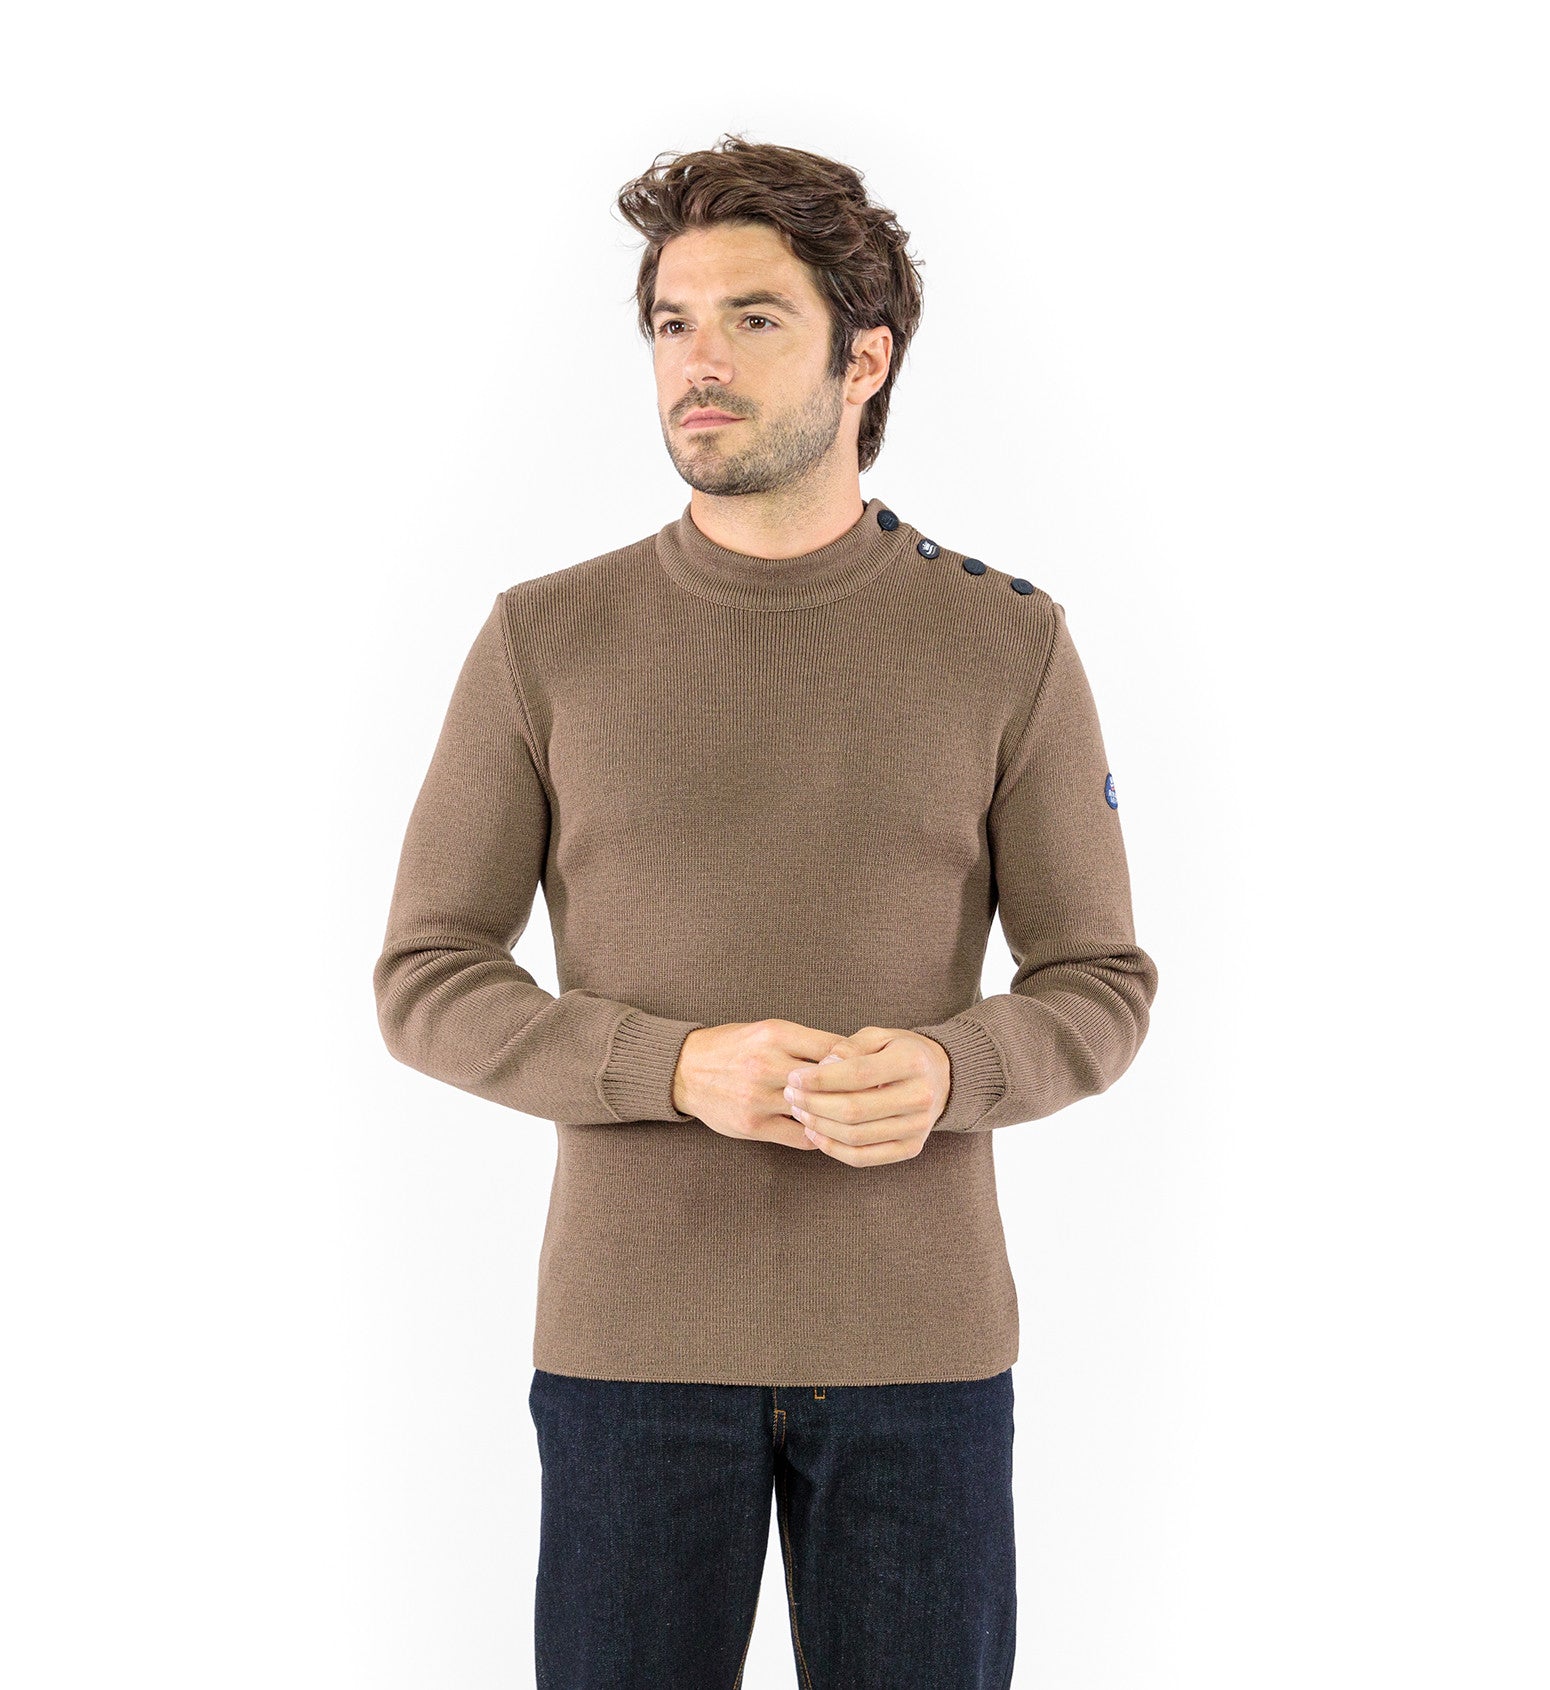 Plain sailor sweater 100% virgin wool